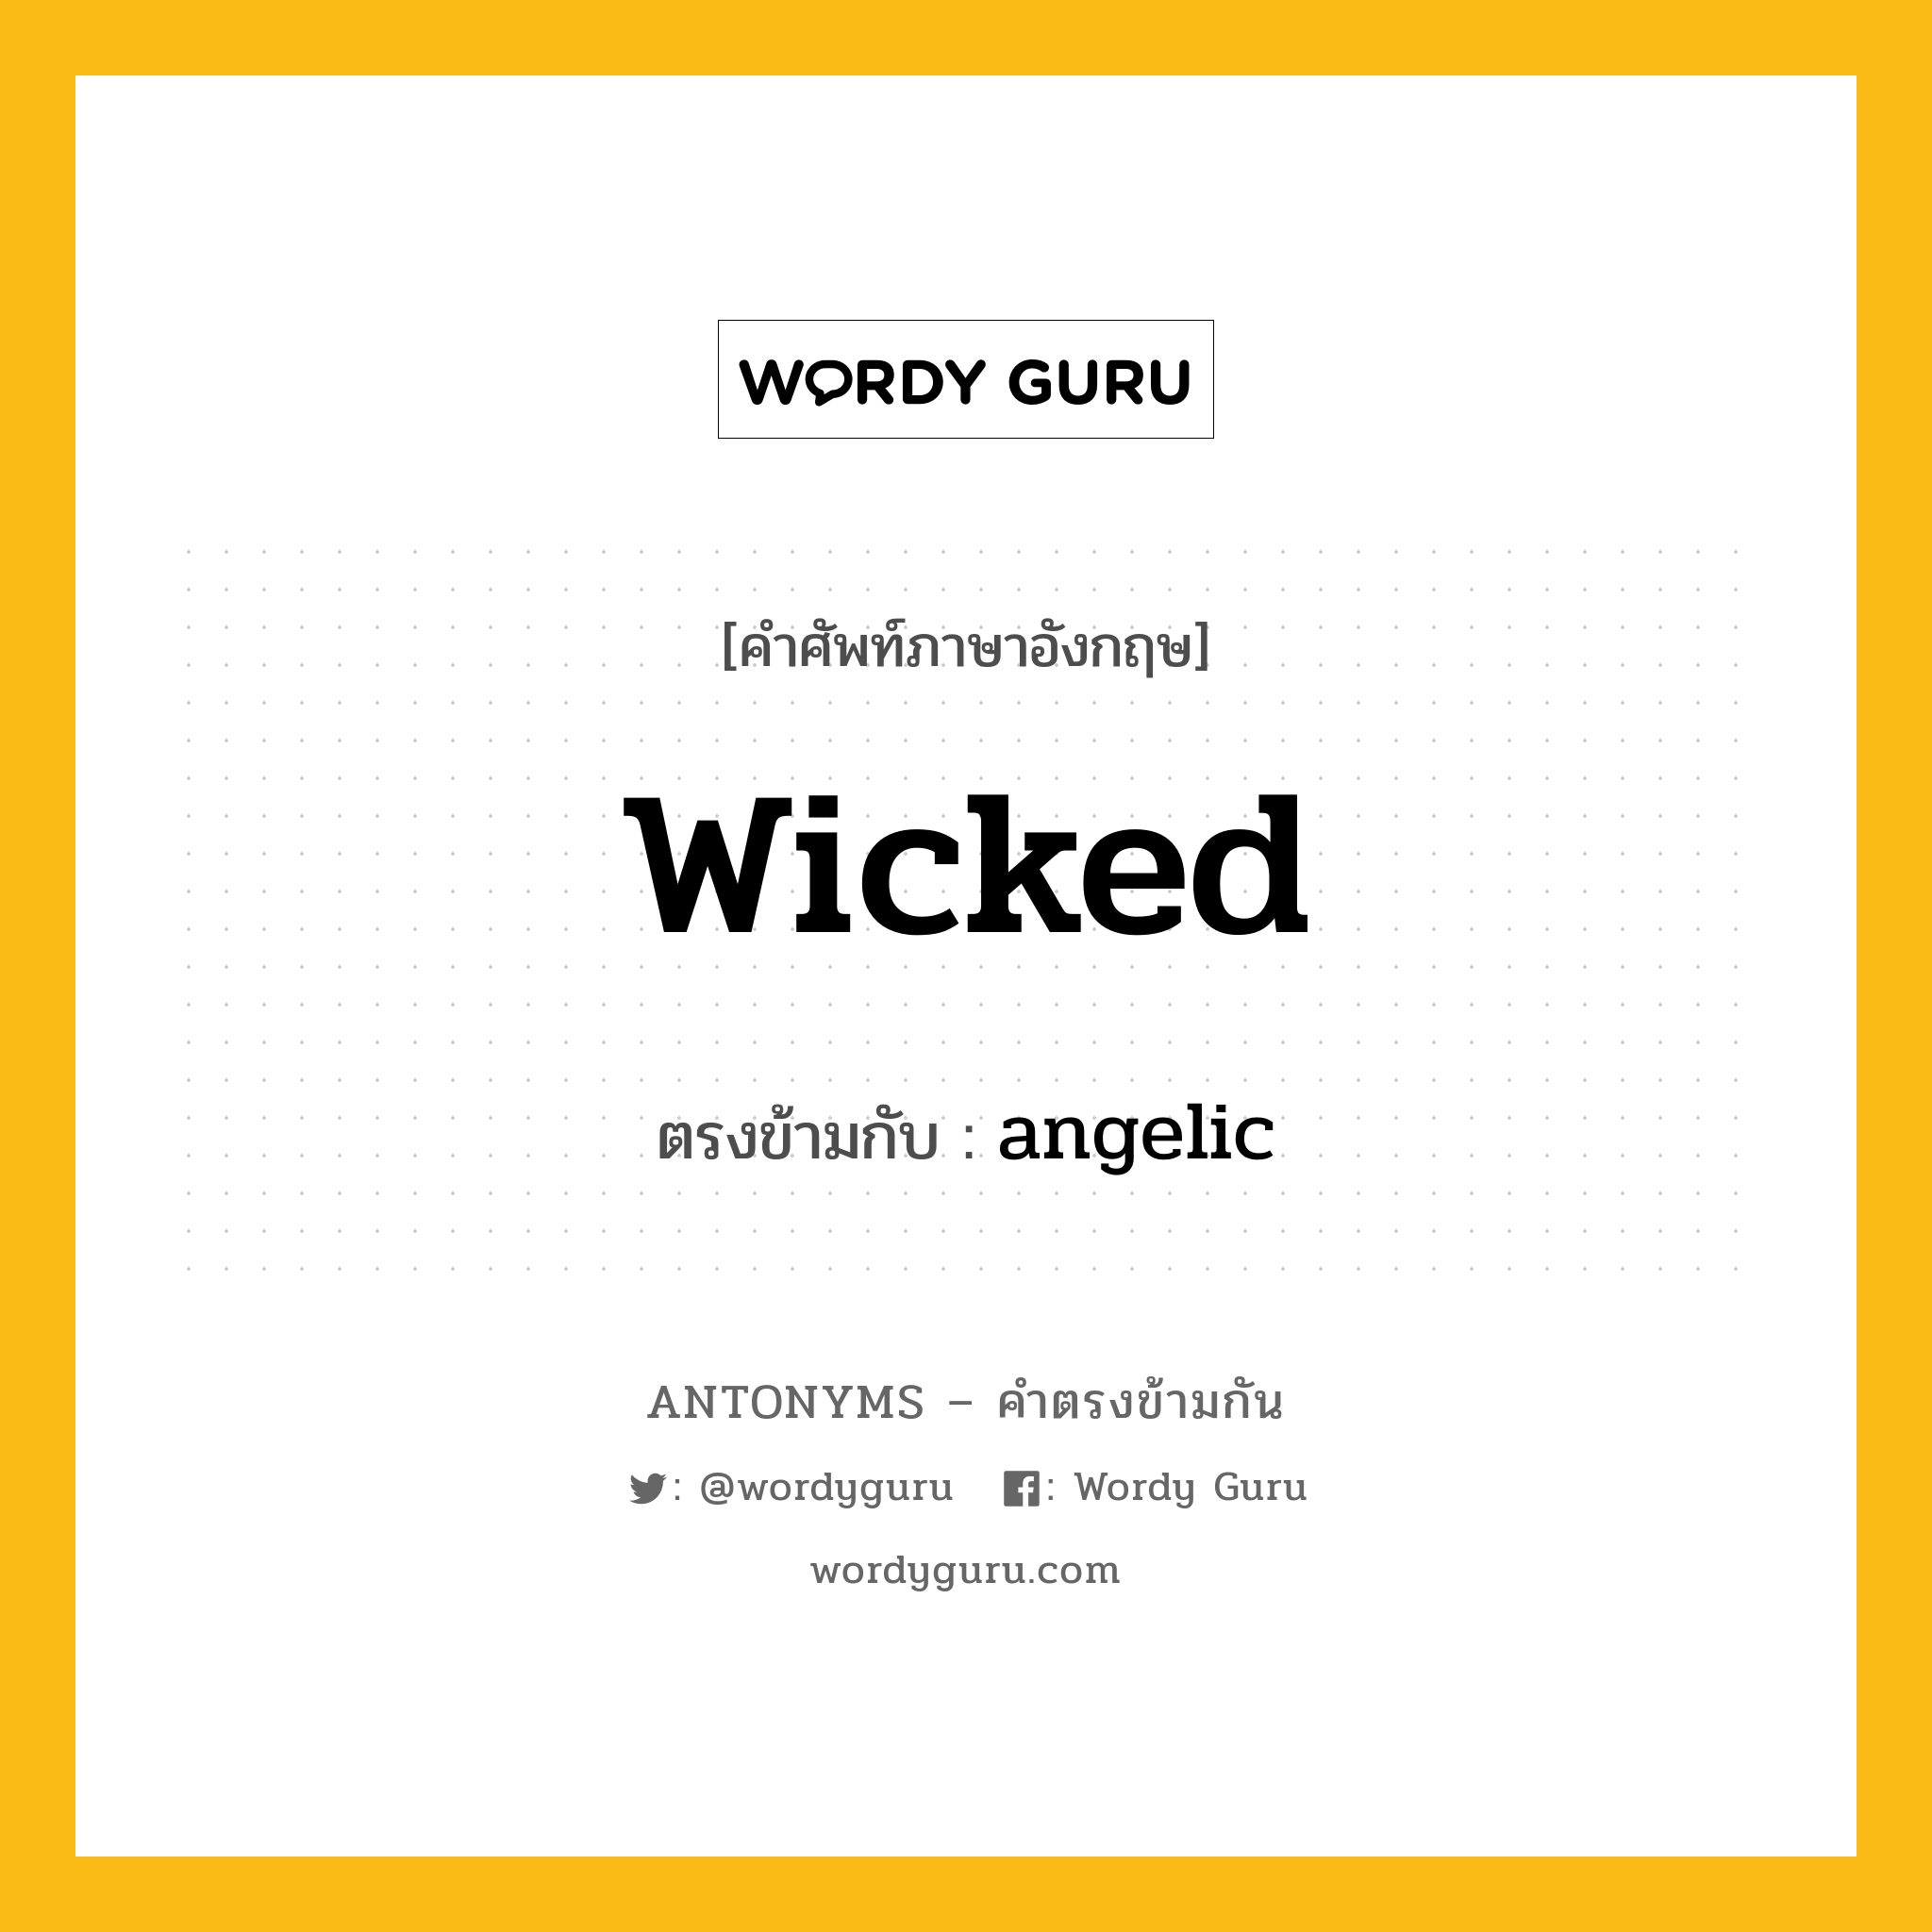 wicked เป็นคำตรงข้ามกับคำไหนบ้าง?, คำศัพท์ภาษาอังกฤษ wicked ตรงข้ามกับ angelic หมวด angelic